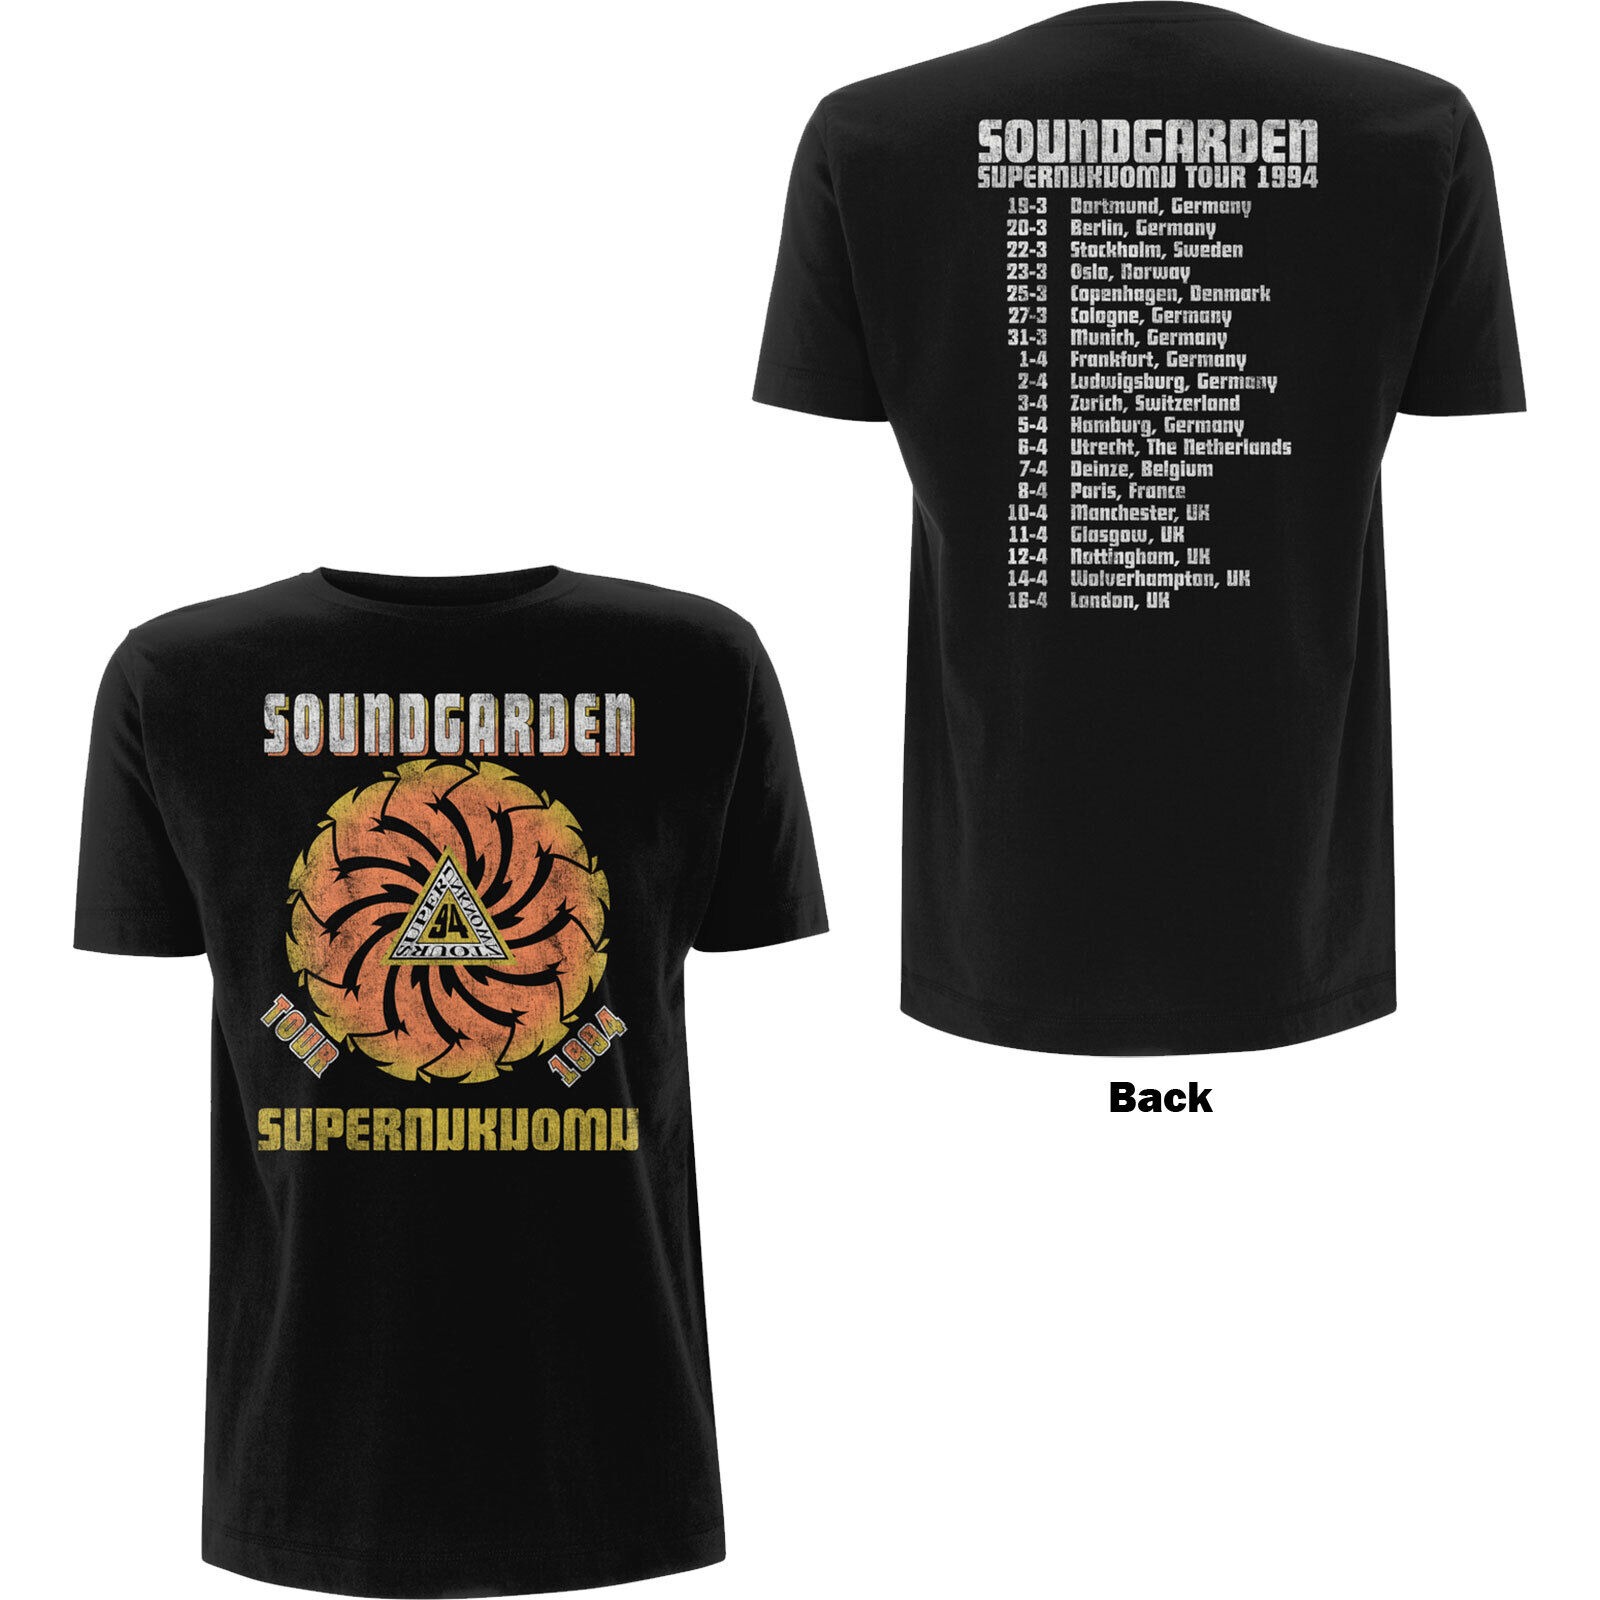 Soundgarden Superunknown Tour '94 Official Merchandise T-Shirt